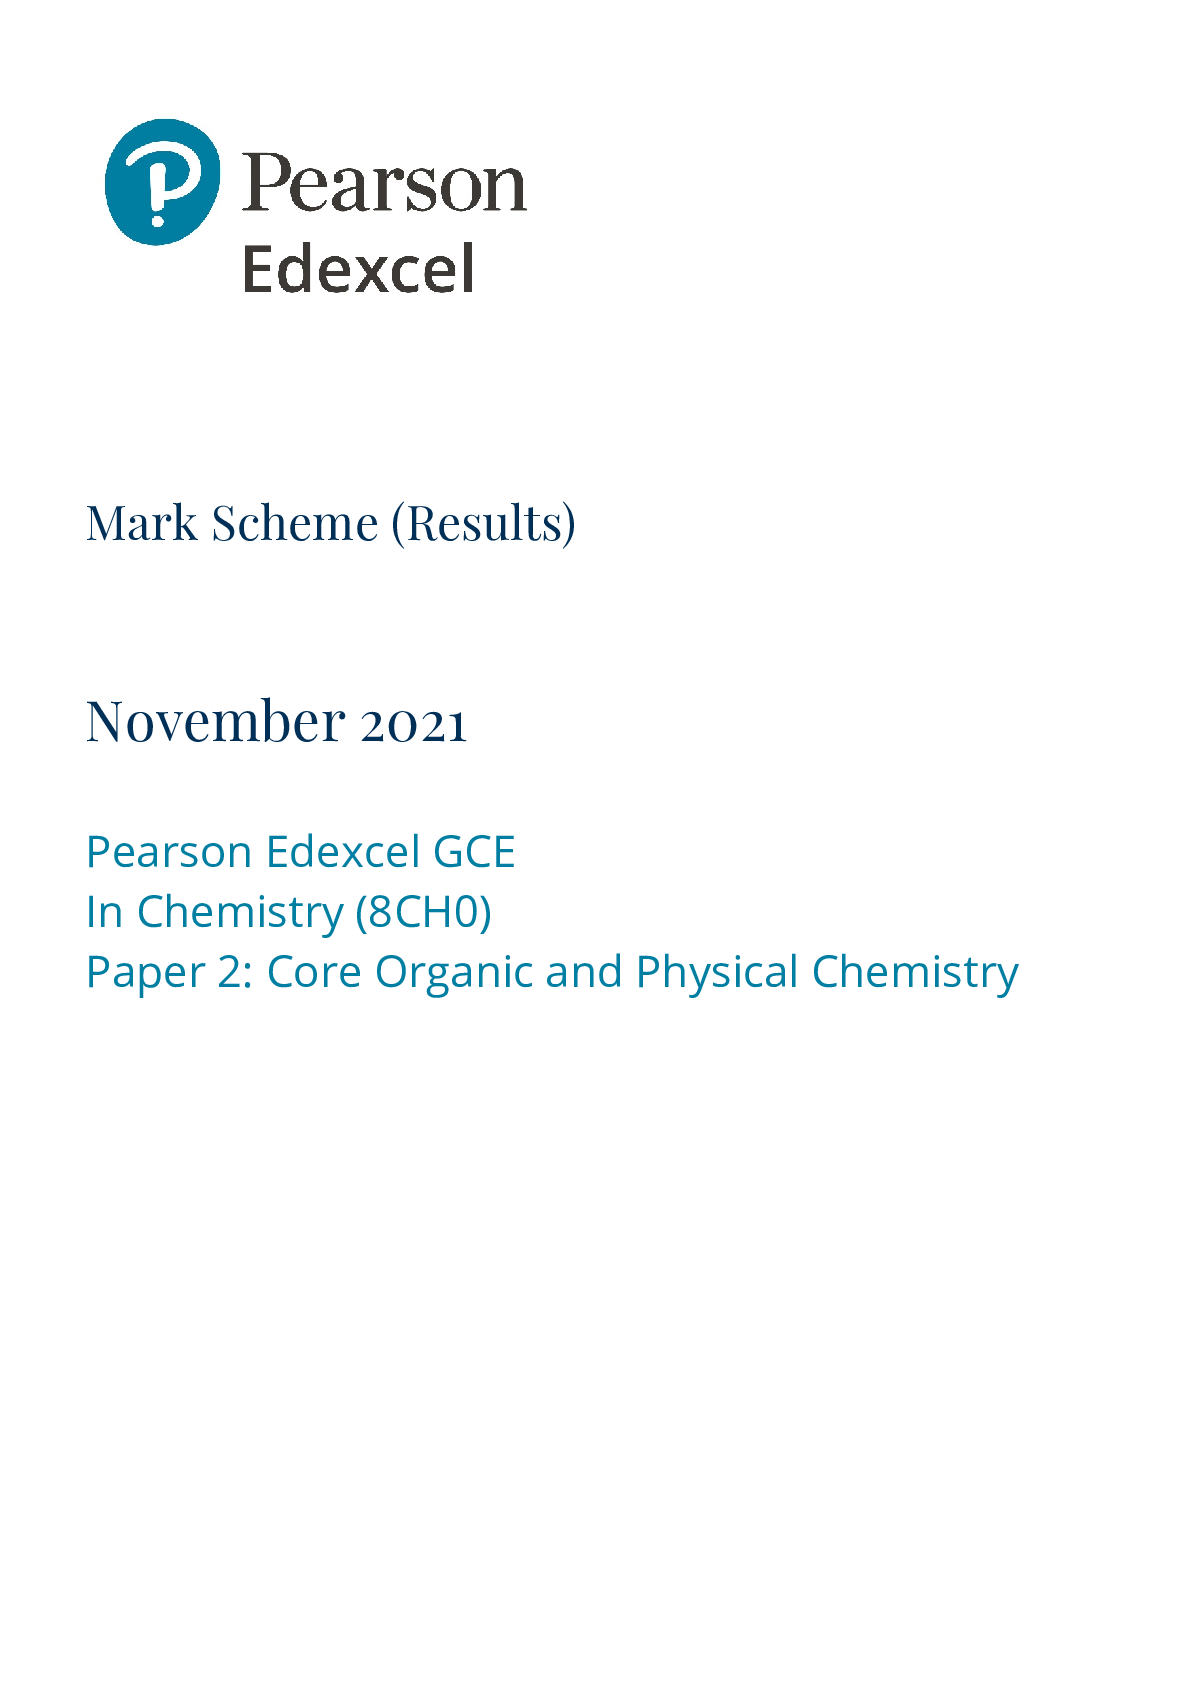 Chemistry_8CH0 02_Mark Scheme_Nov 2021.png